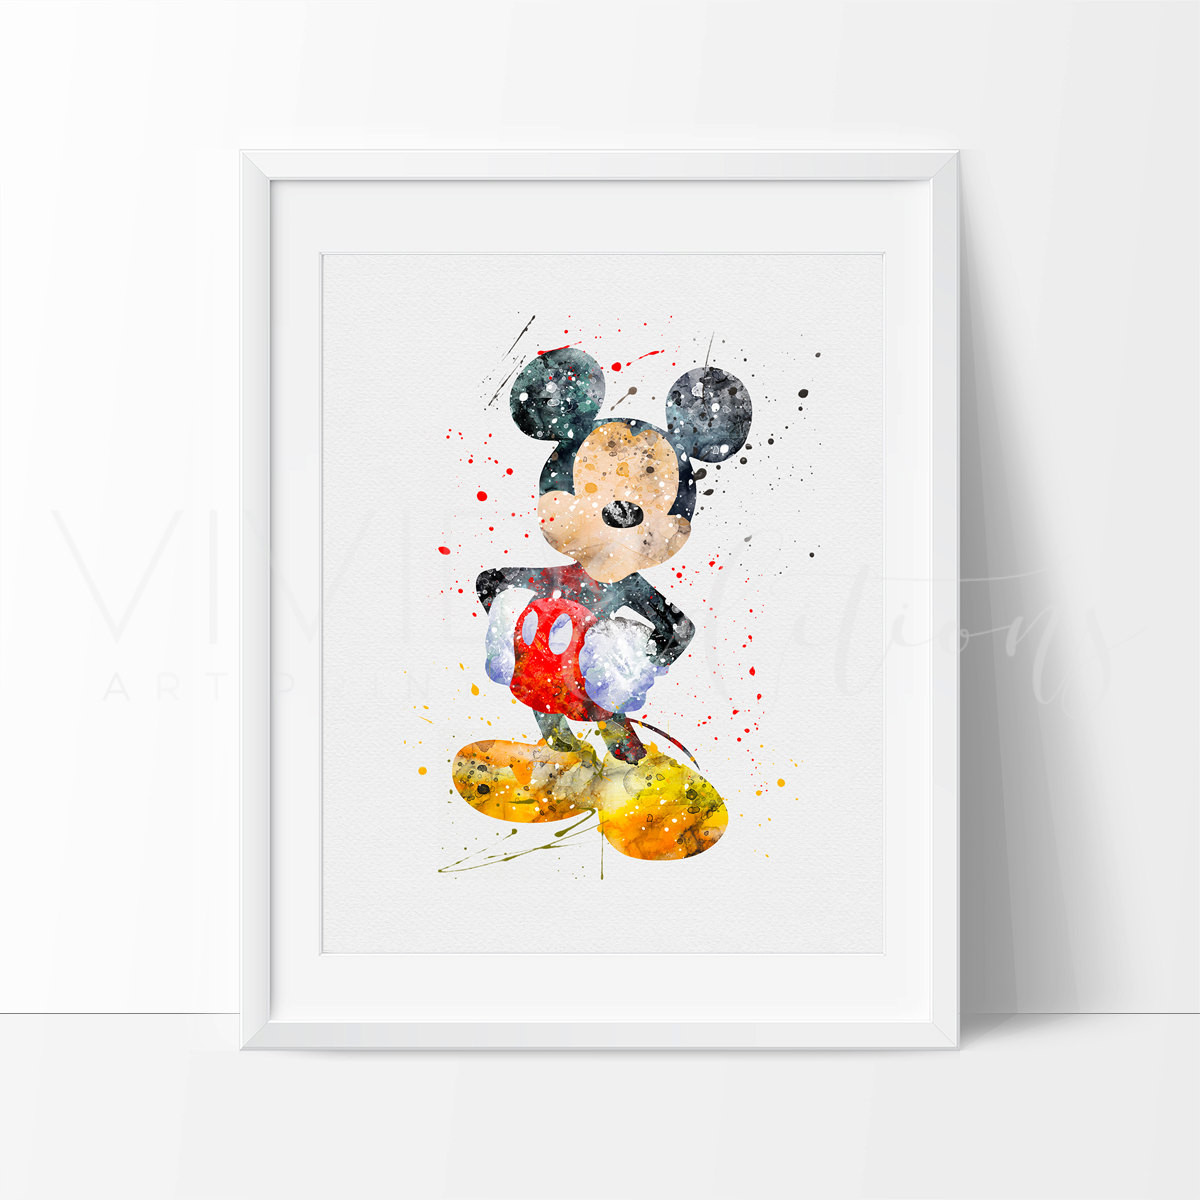 Best ideas about Disney Wall Art
. Save or Pin Mickey Mouse Print Disney Nursery Art Print Wall Decor Now.